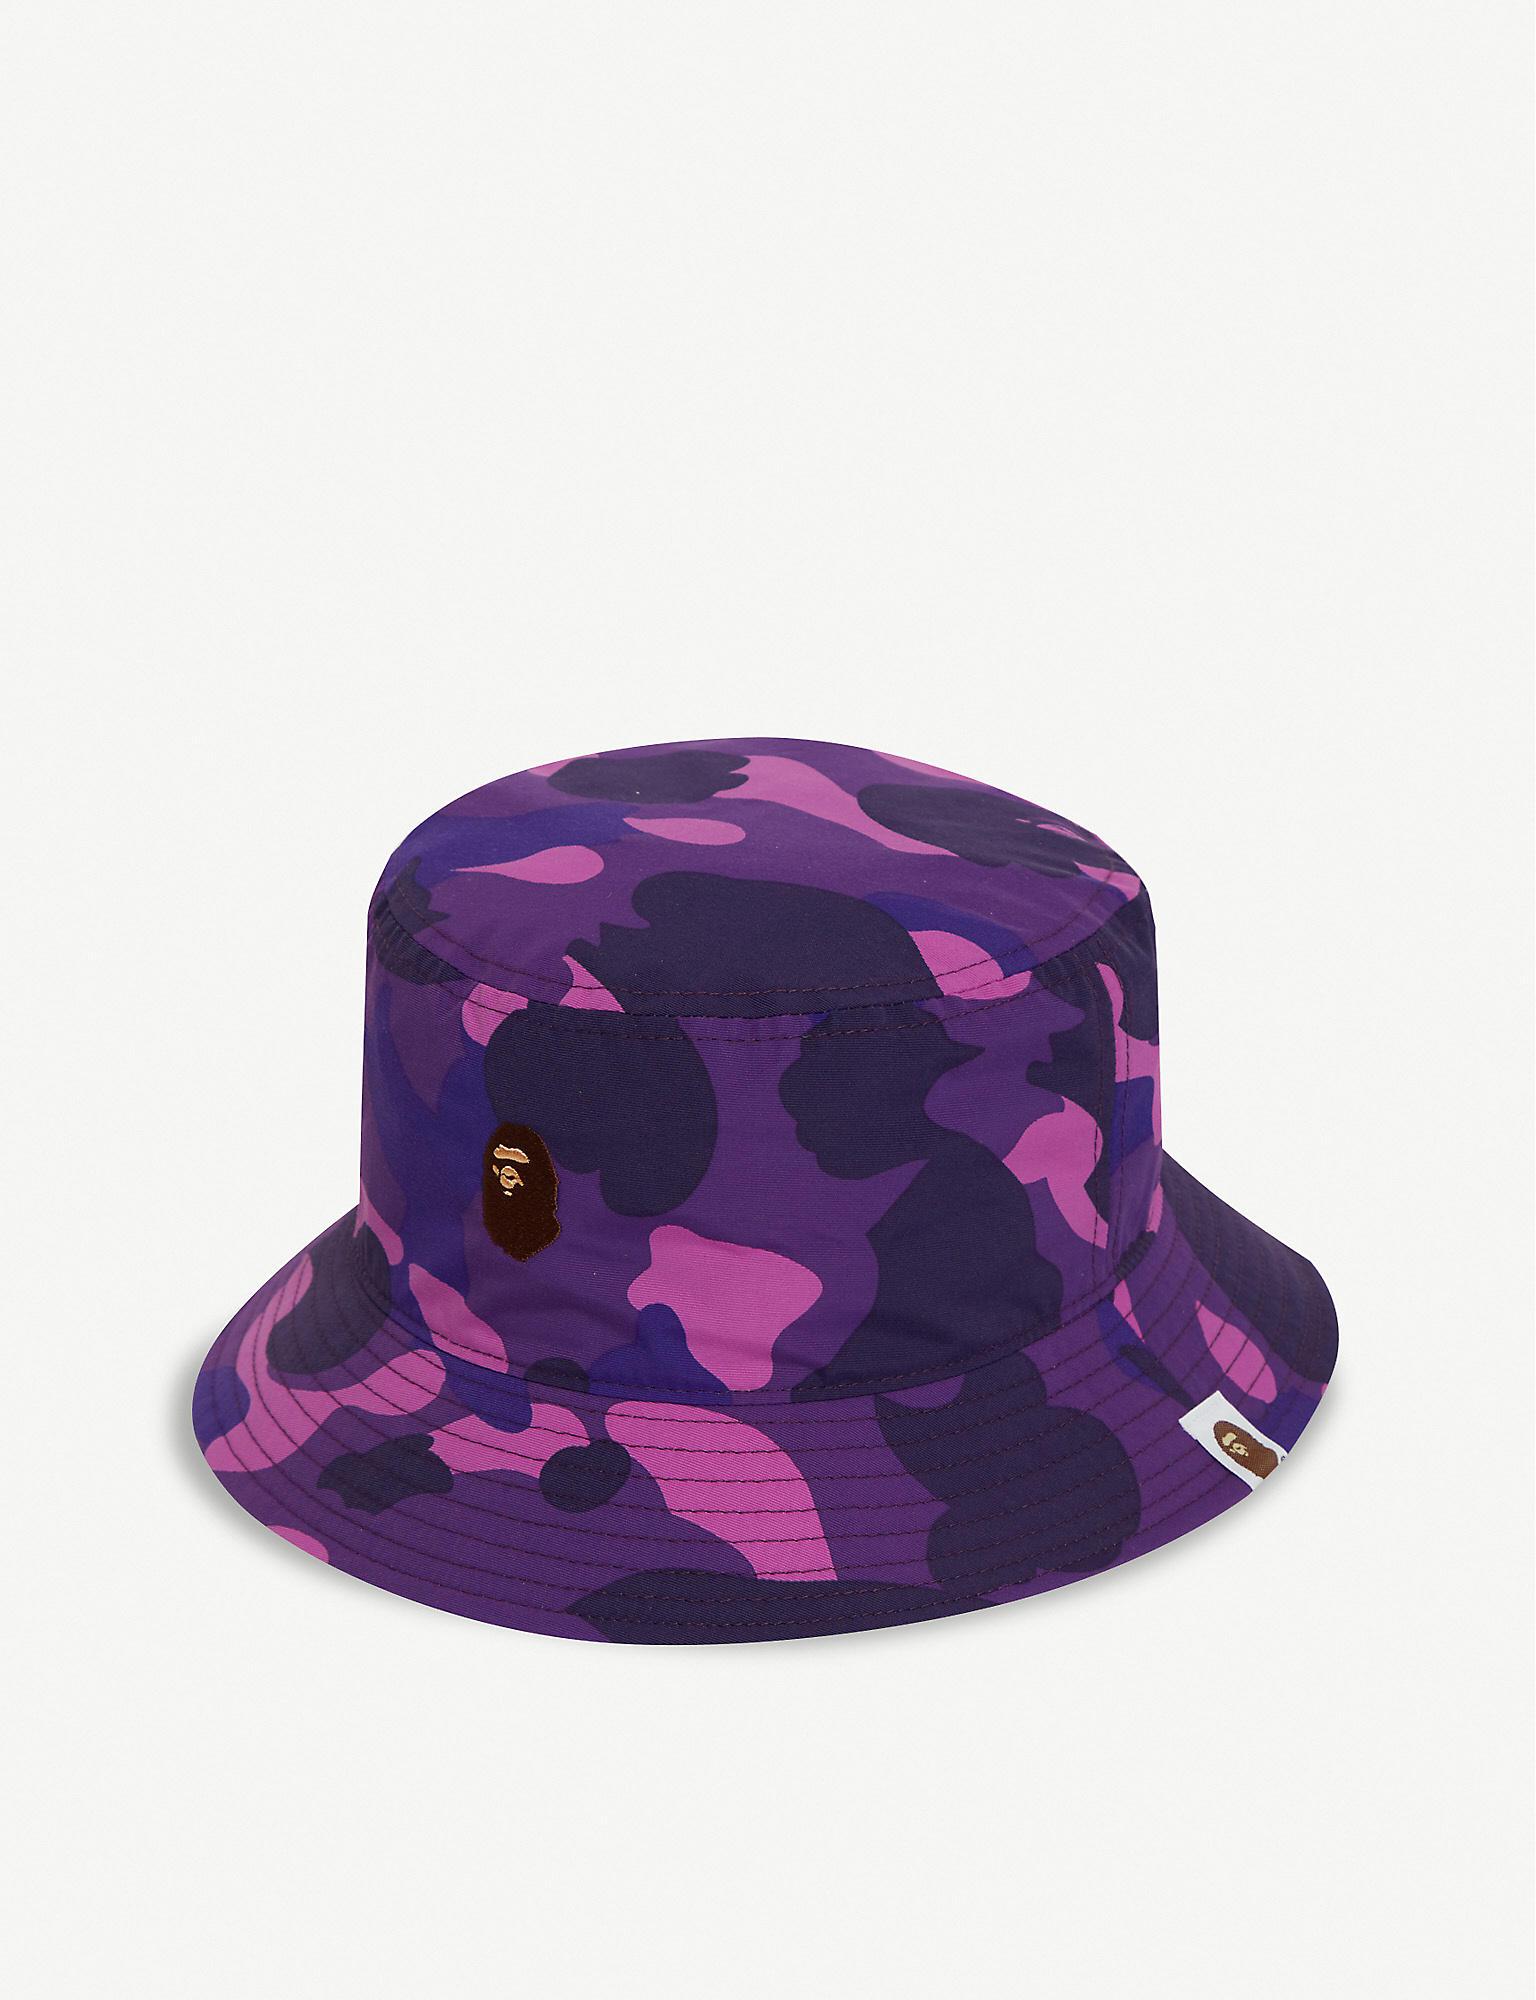 architect raken deuropening A Bathing Ape Camouflage Cotton Bucket Hat in Purple for Men | Lyst